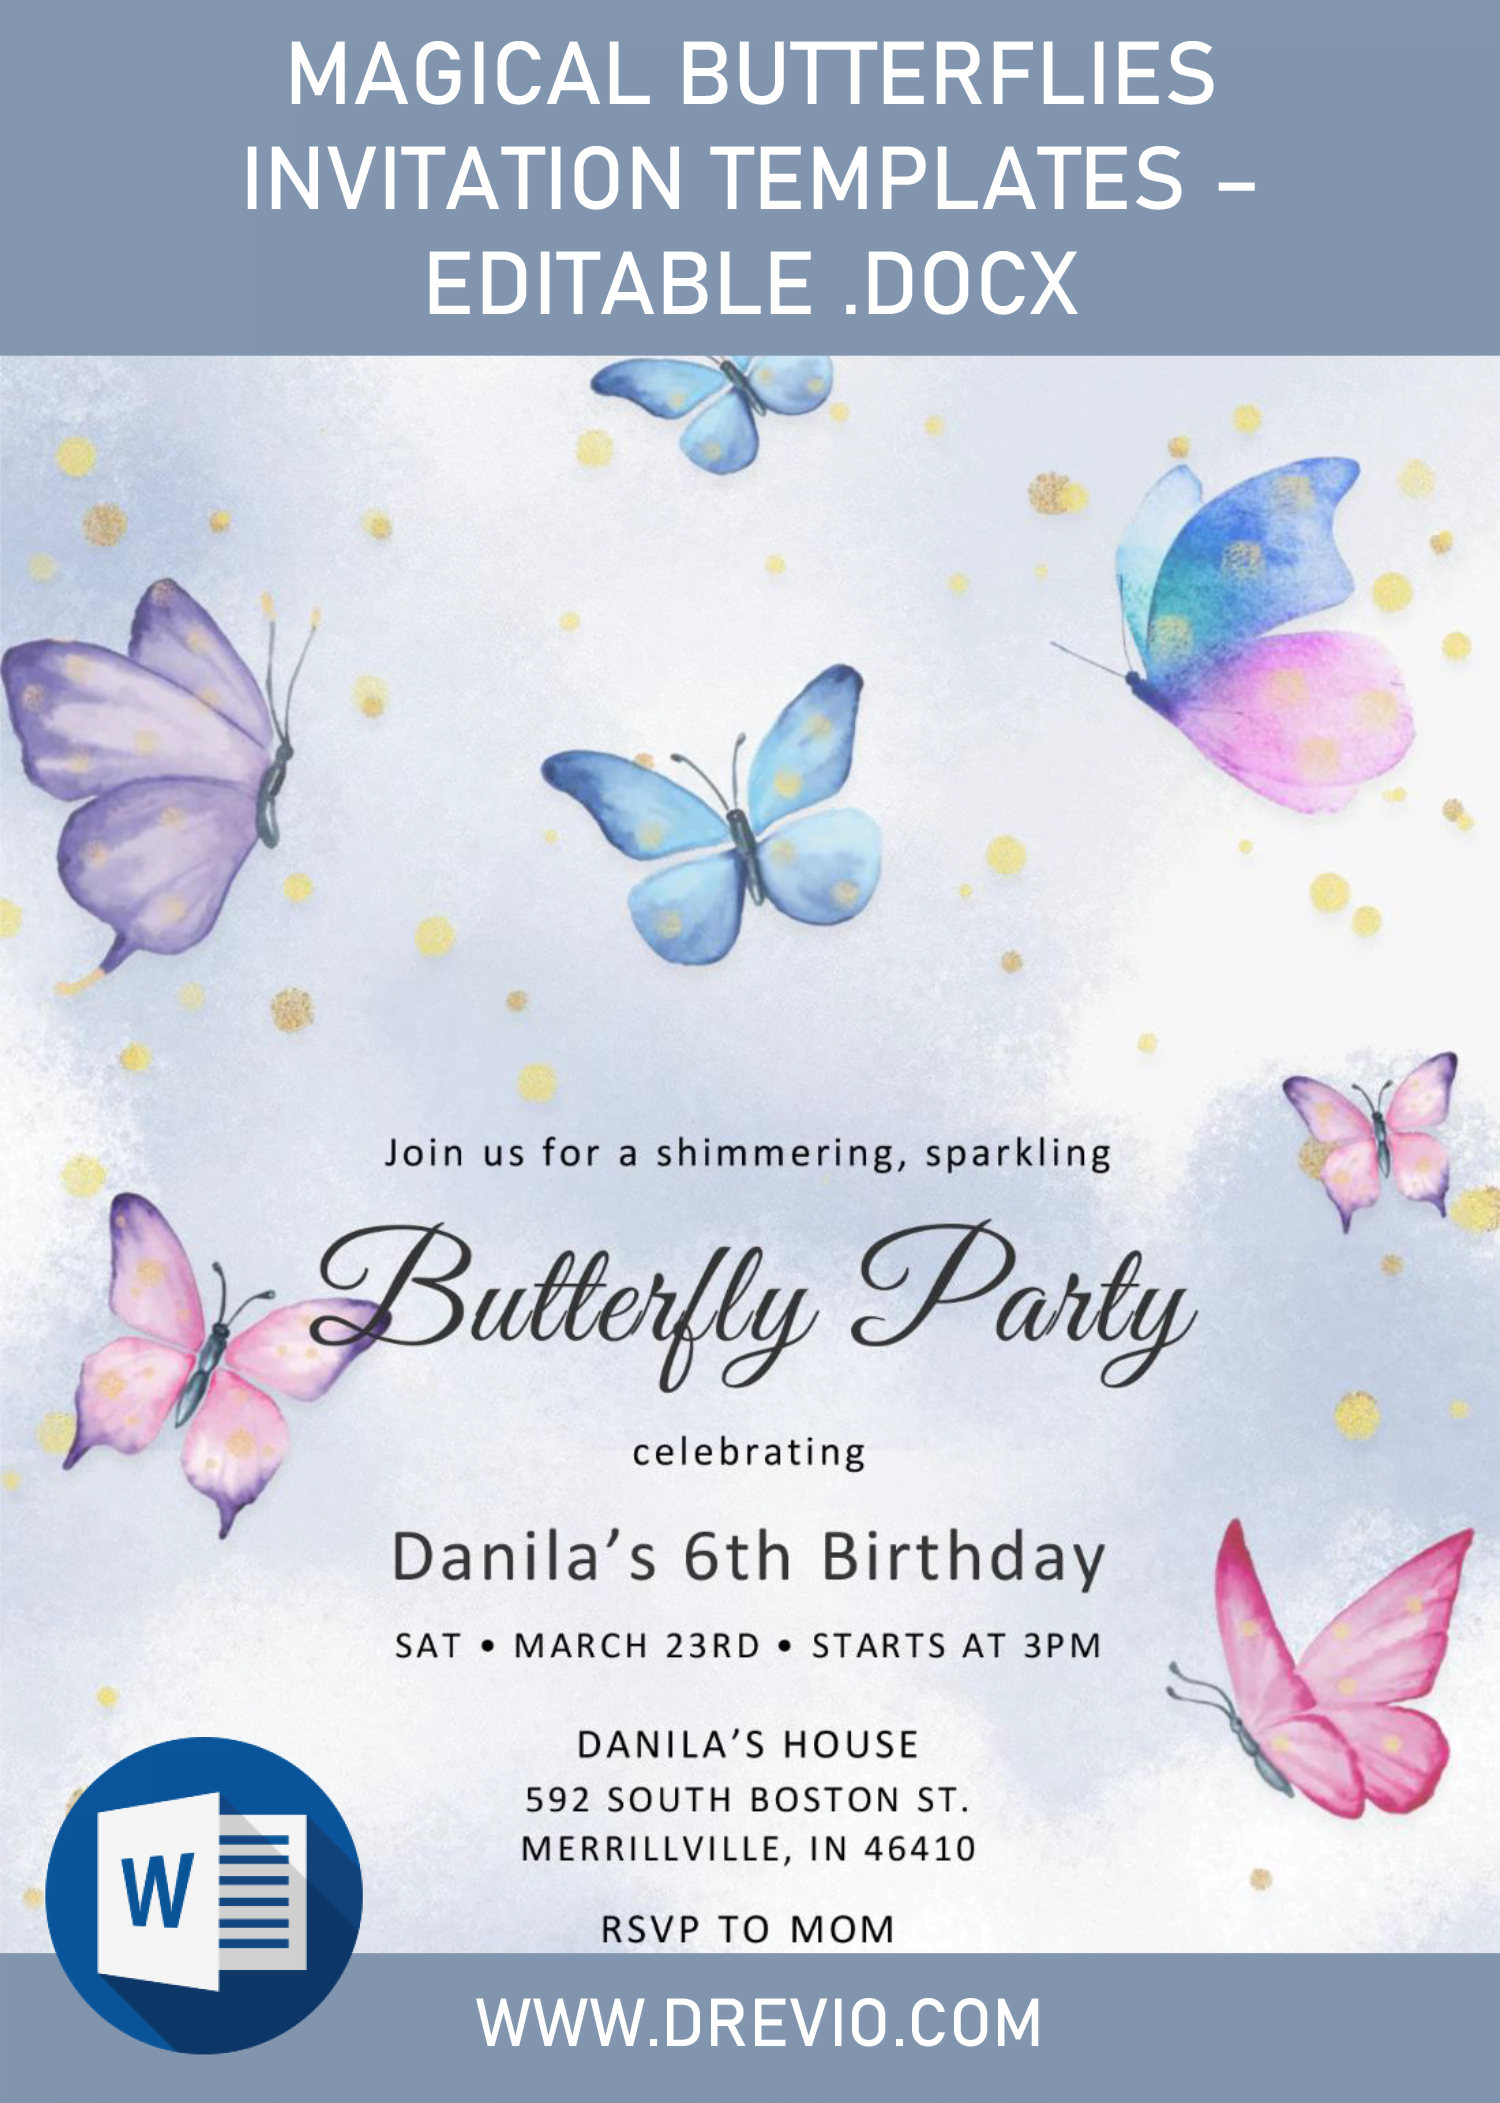 Magical Butterflies Invitation Templates – Editable .Docx